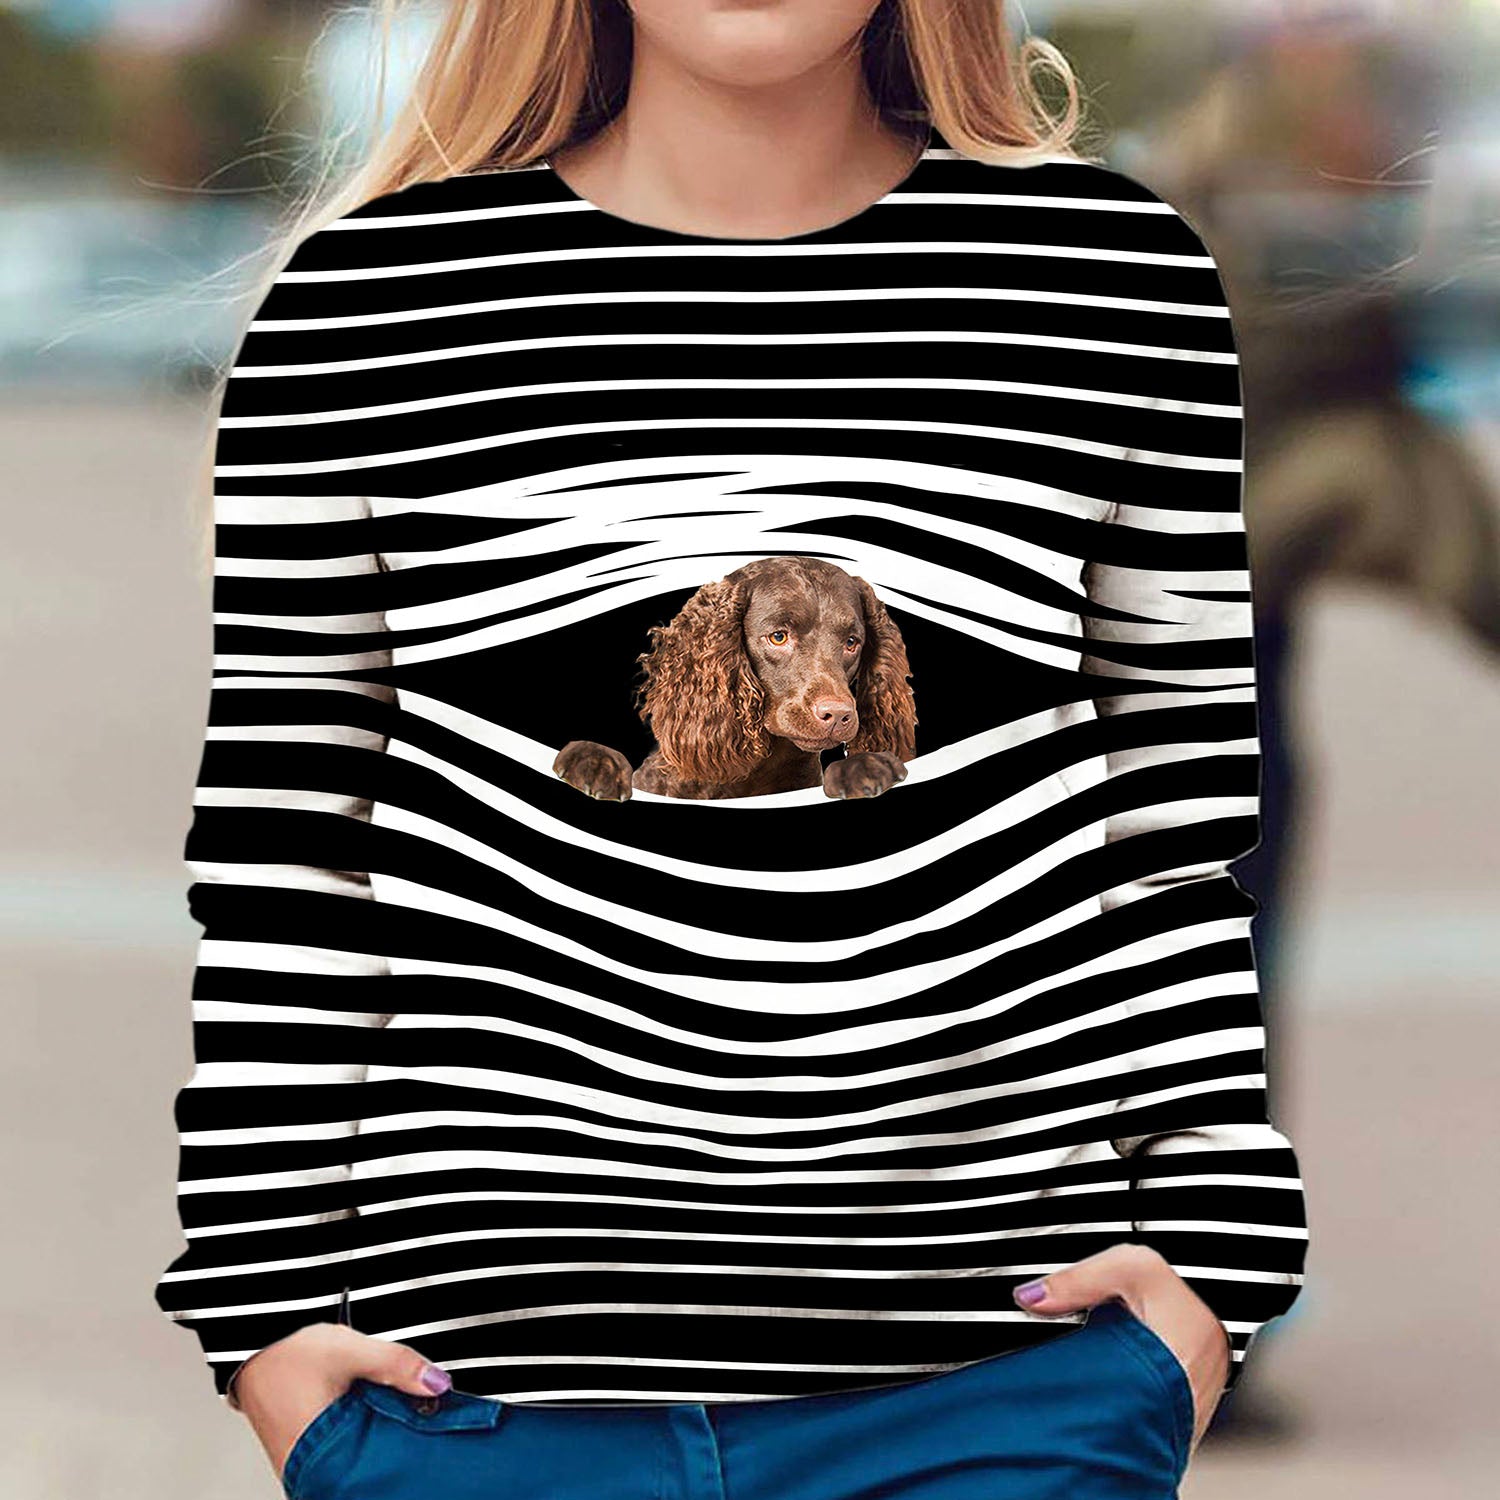 American Water Spaniel - Stripe - Premium Sweater